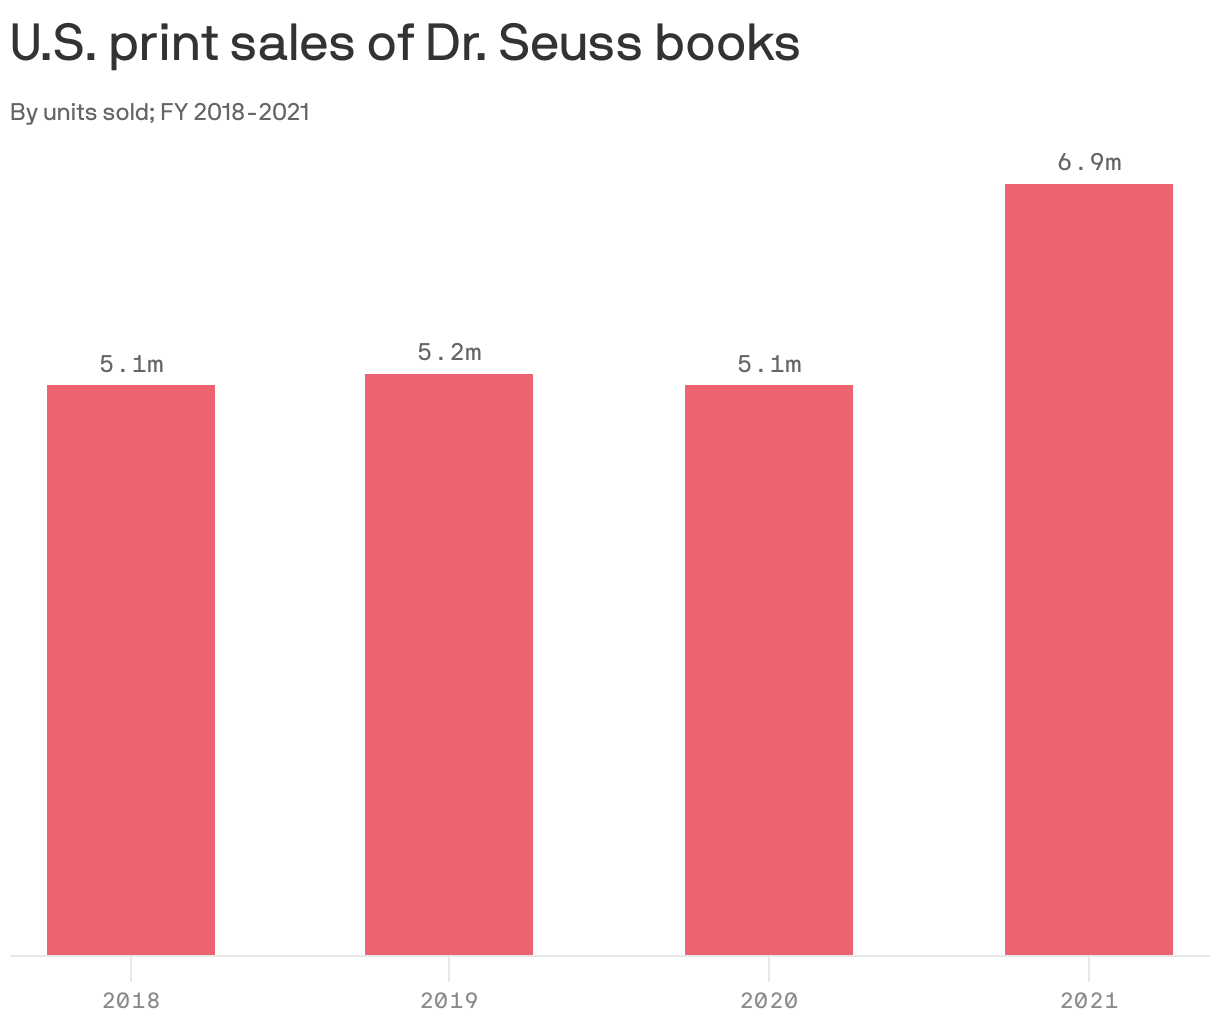 U.S. print sales of Dr. Seuss books